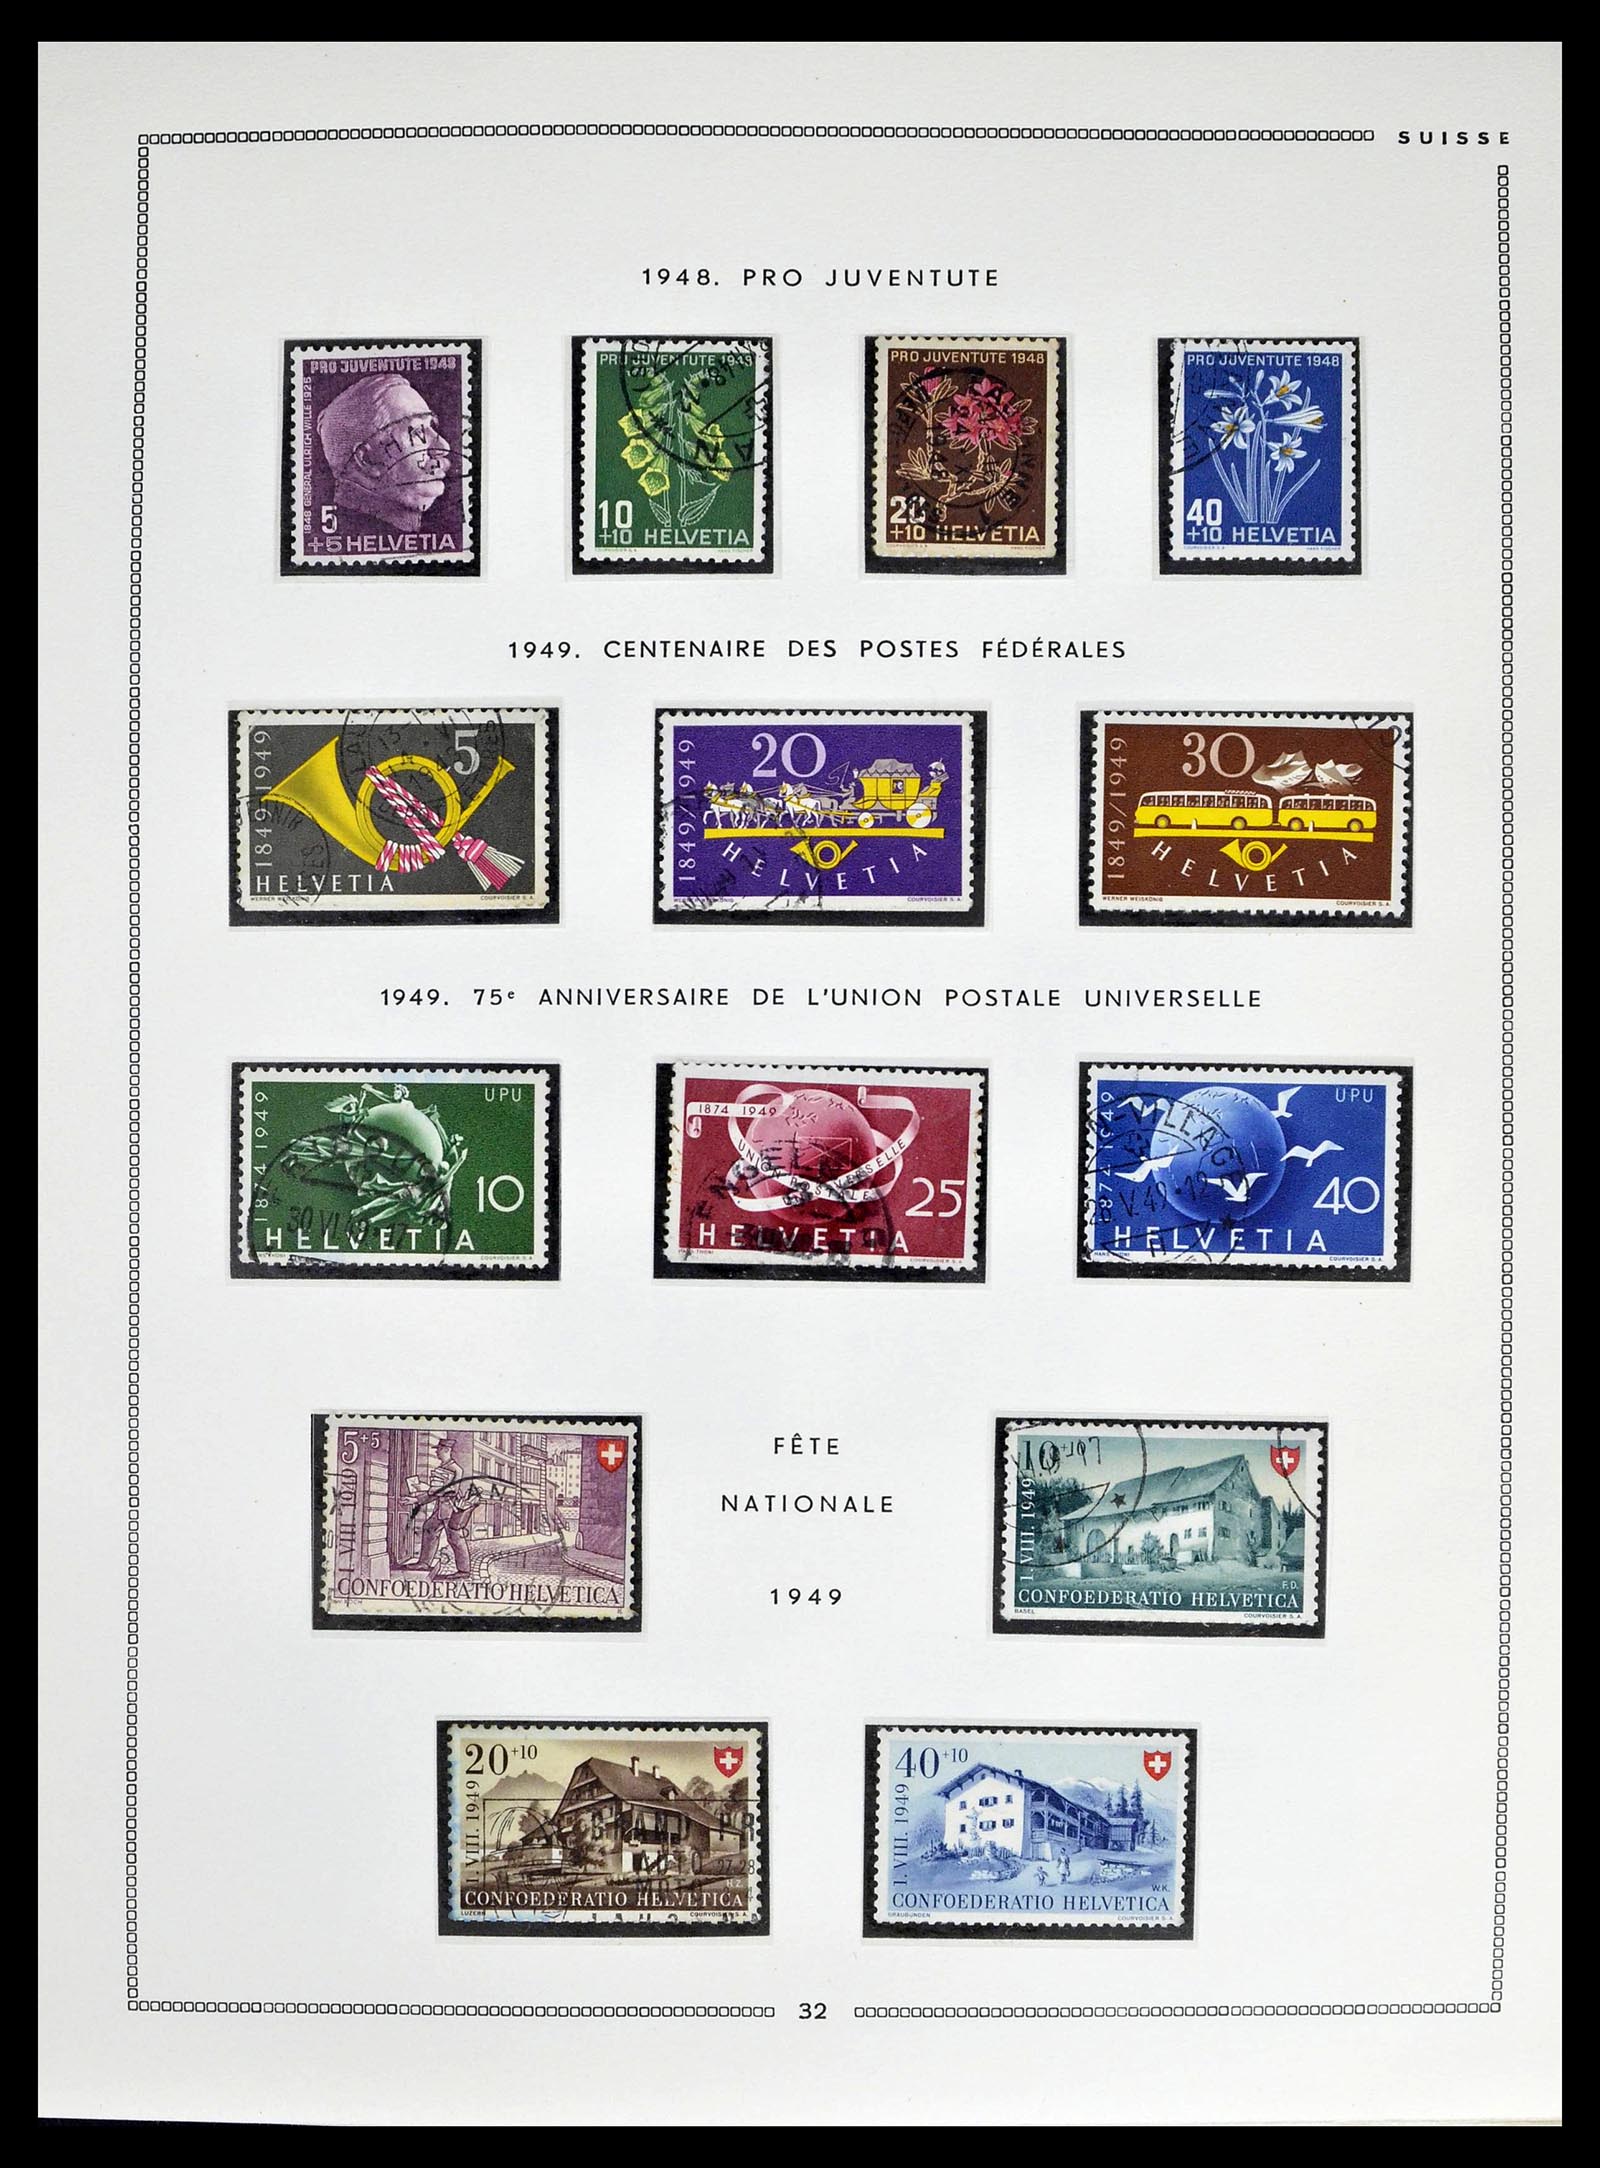 39094 0030 - Stamp collection 39094 Switzerland 1850-2005.